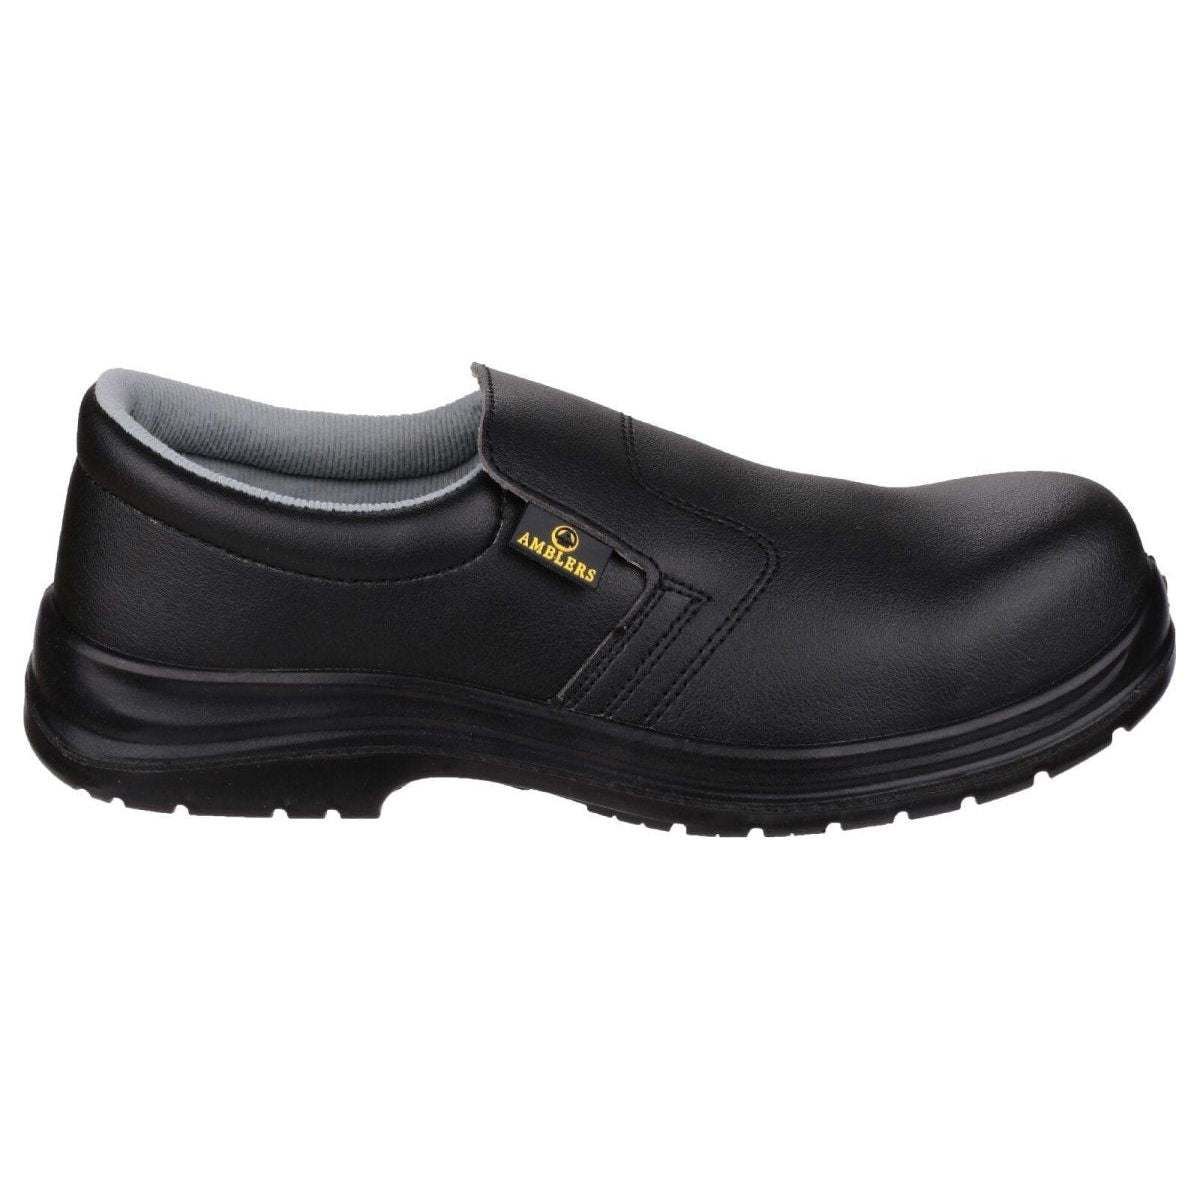 Amblers Fs661 Lightweight Safety Shoes Mens - workweargurus.com